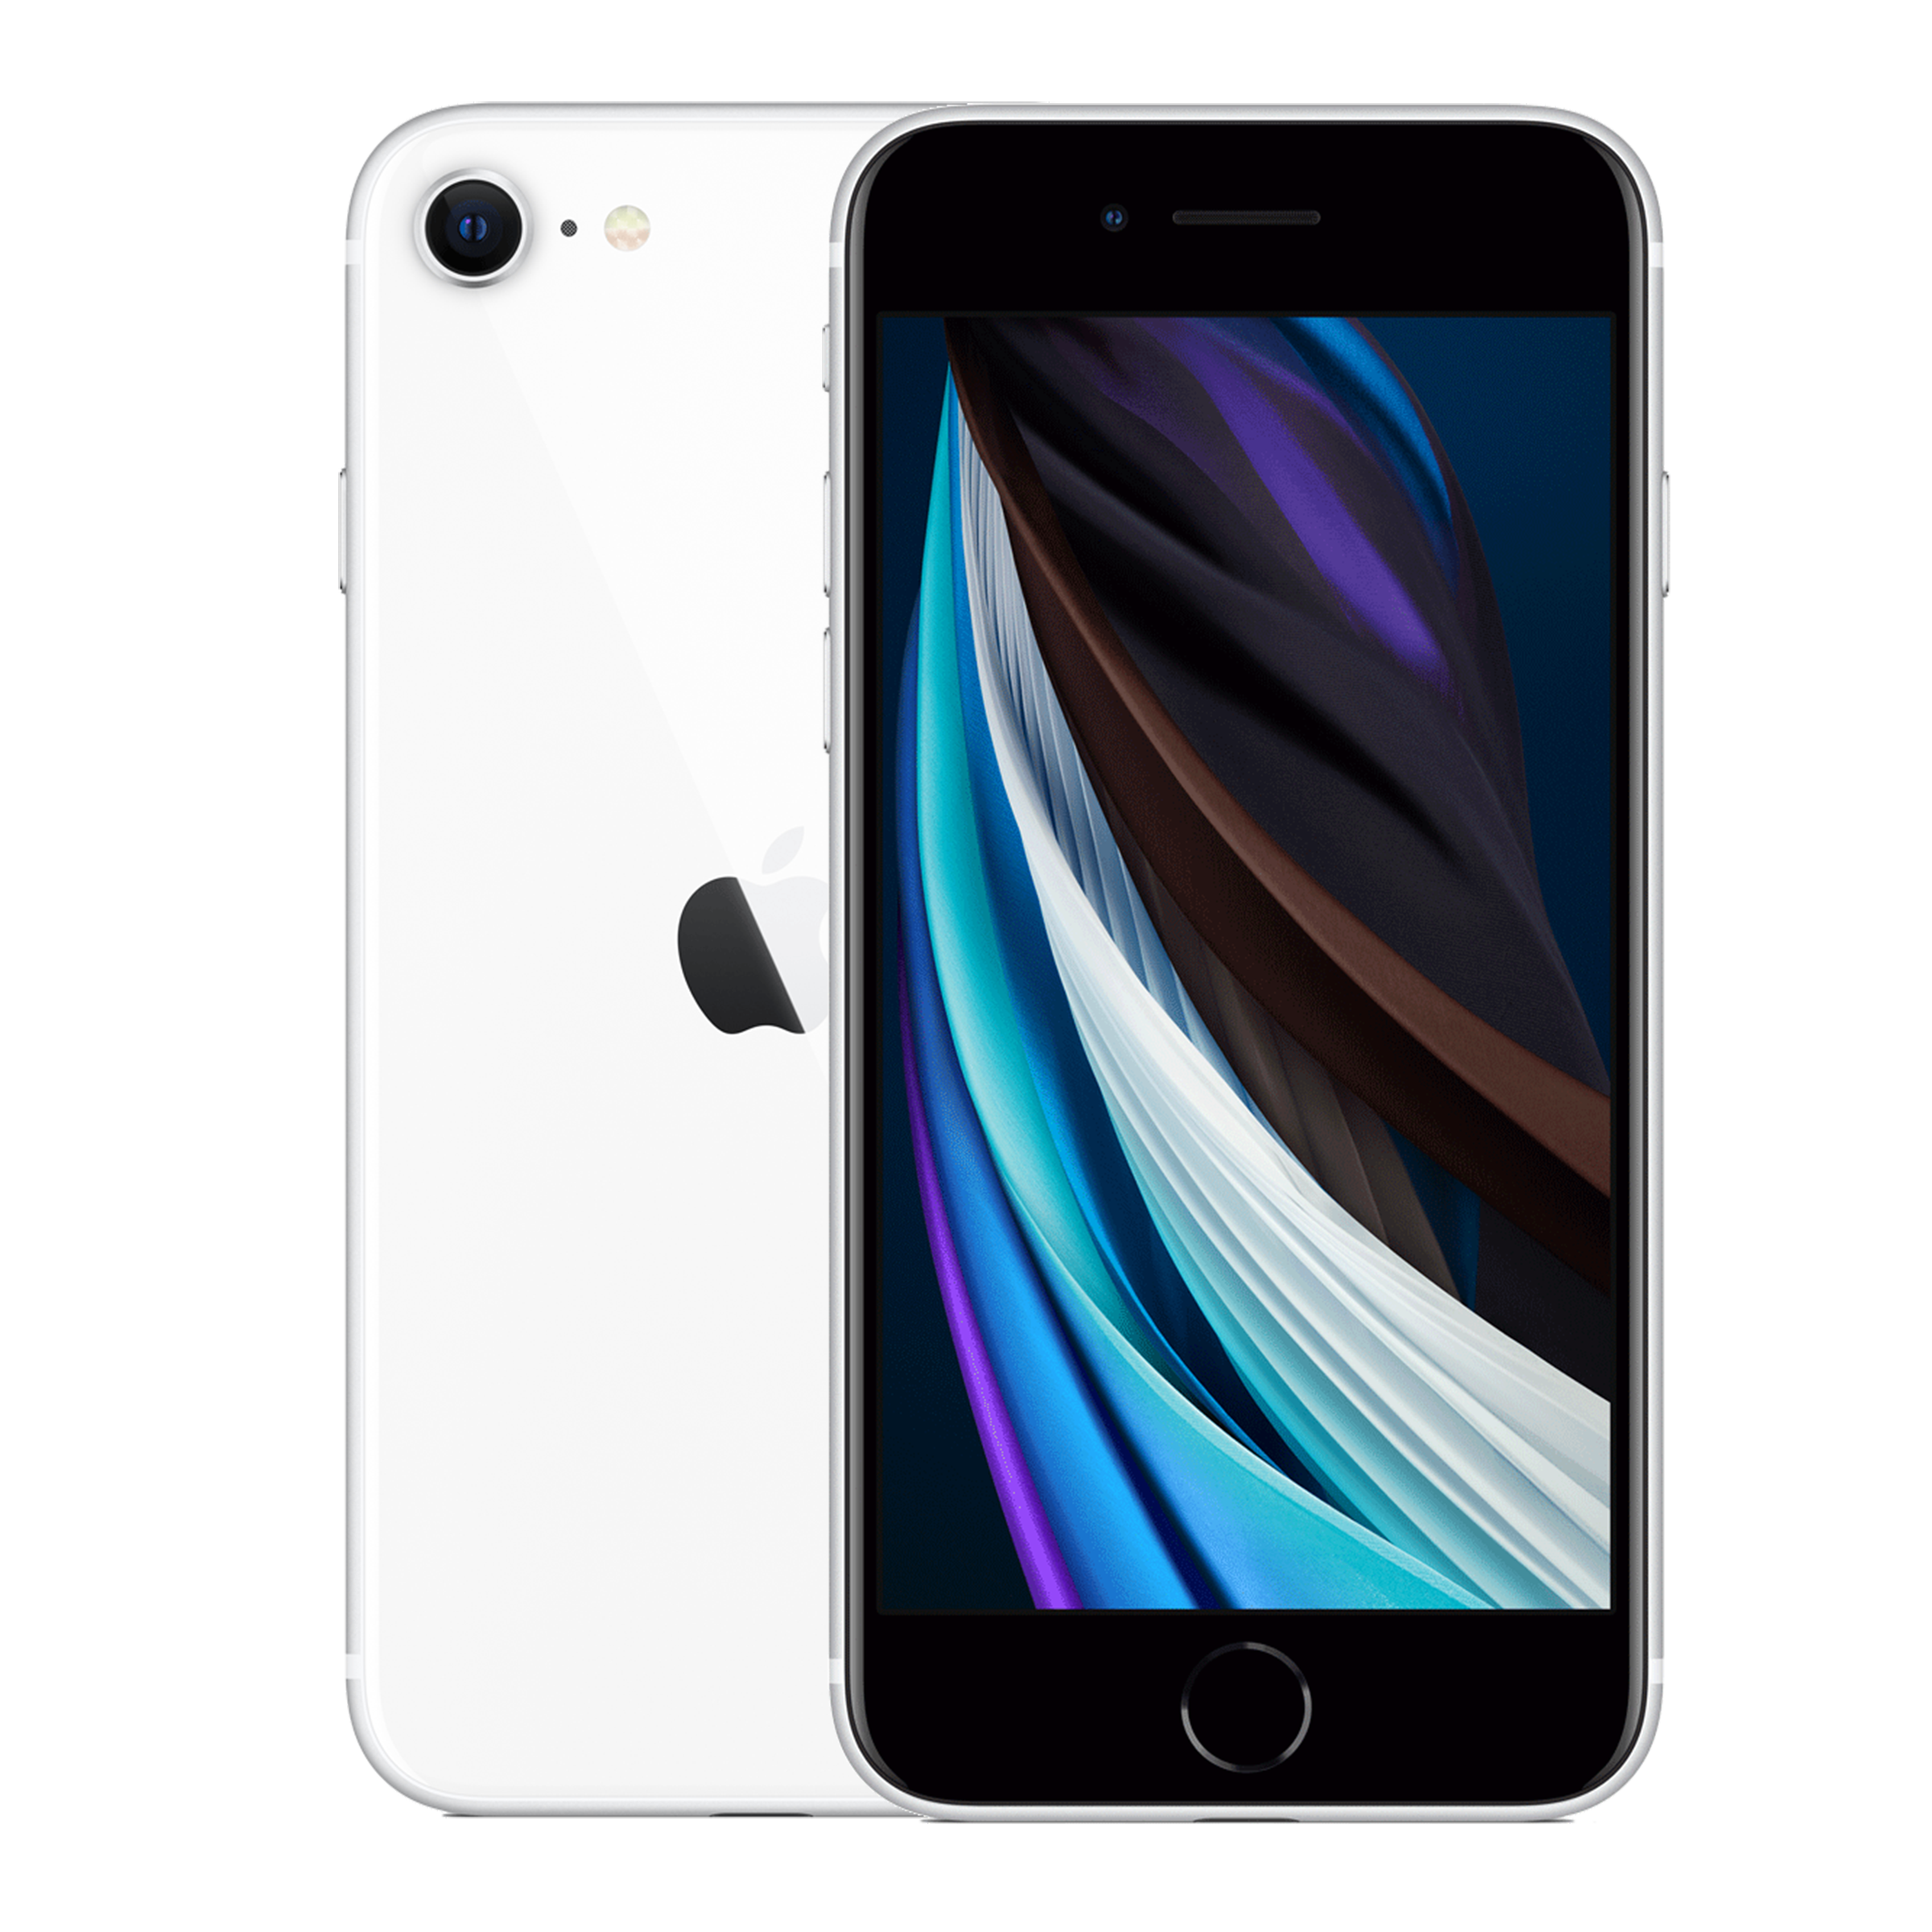 istočno trojanski konj pekmez  Apple iPhone SE 2 Plus Expected Price, Full Specs & Release Date (15th Sep  2022) at Gadgets Now